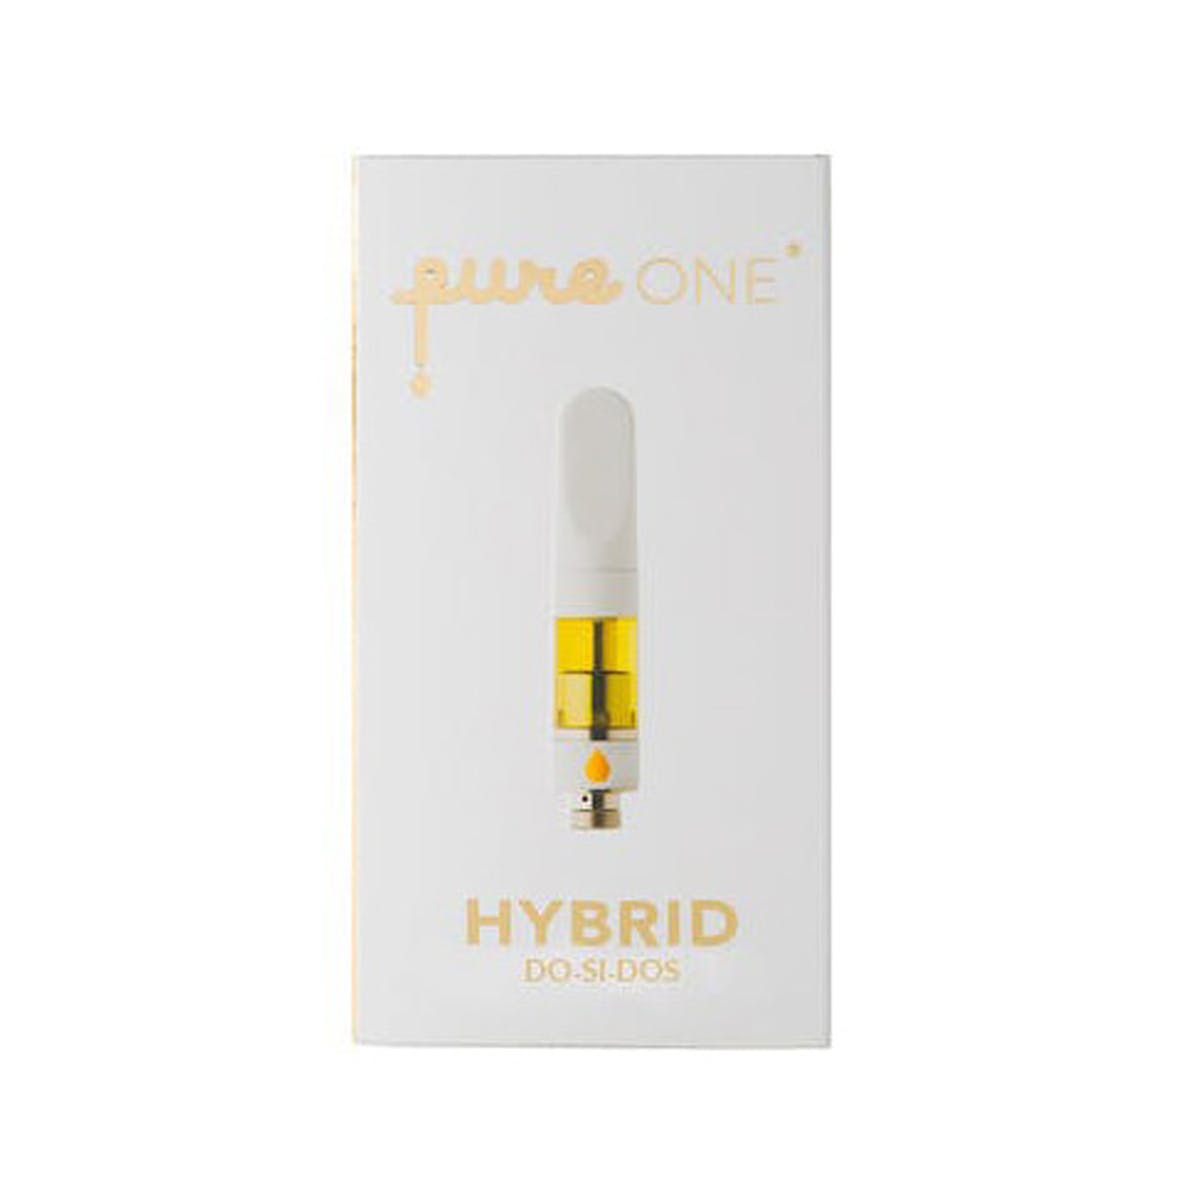 Hybrid PureONE CO2 Cartridge - Do-Si-Dos